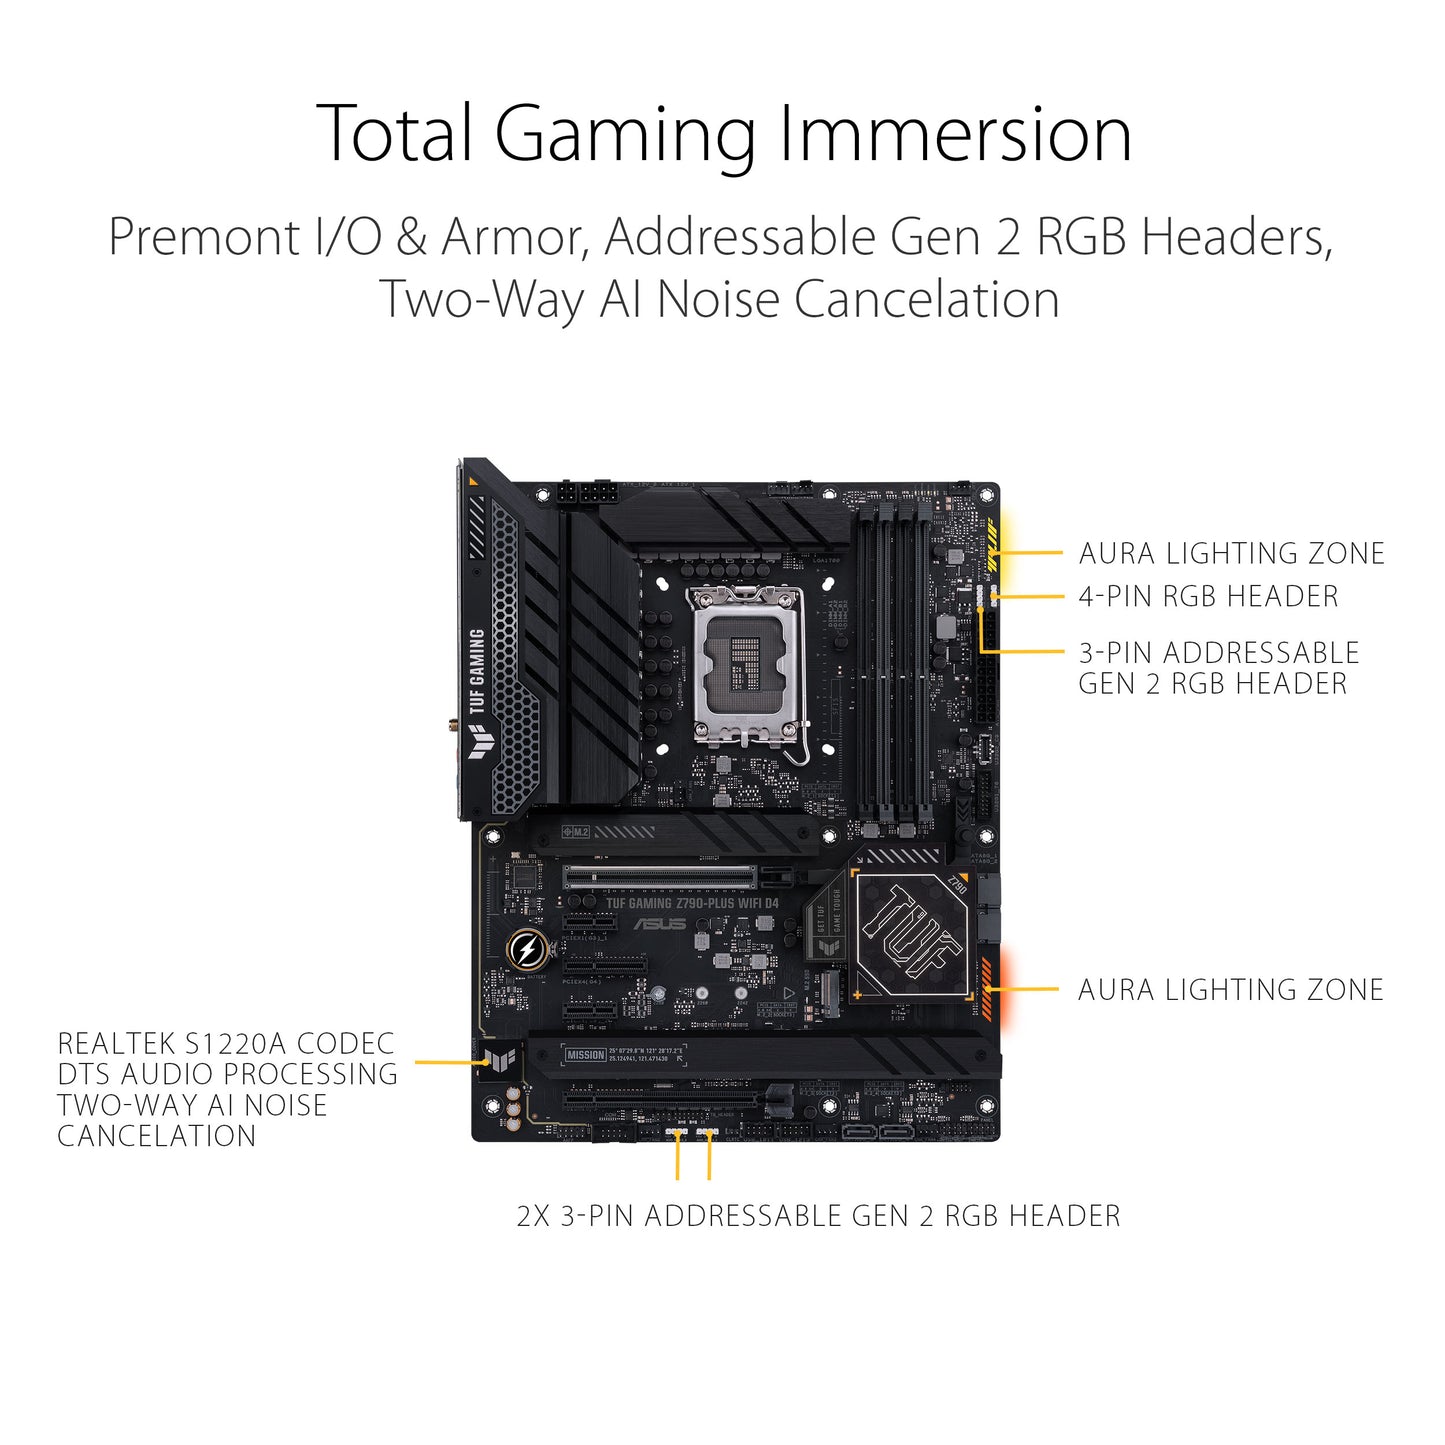 Asus TUF गेमिंग Z790-PLUS WIFI Intel Z790 LGA 1700 ATX गेमिंग मदरबोर्ड